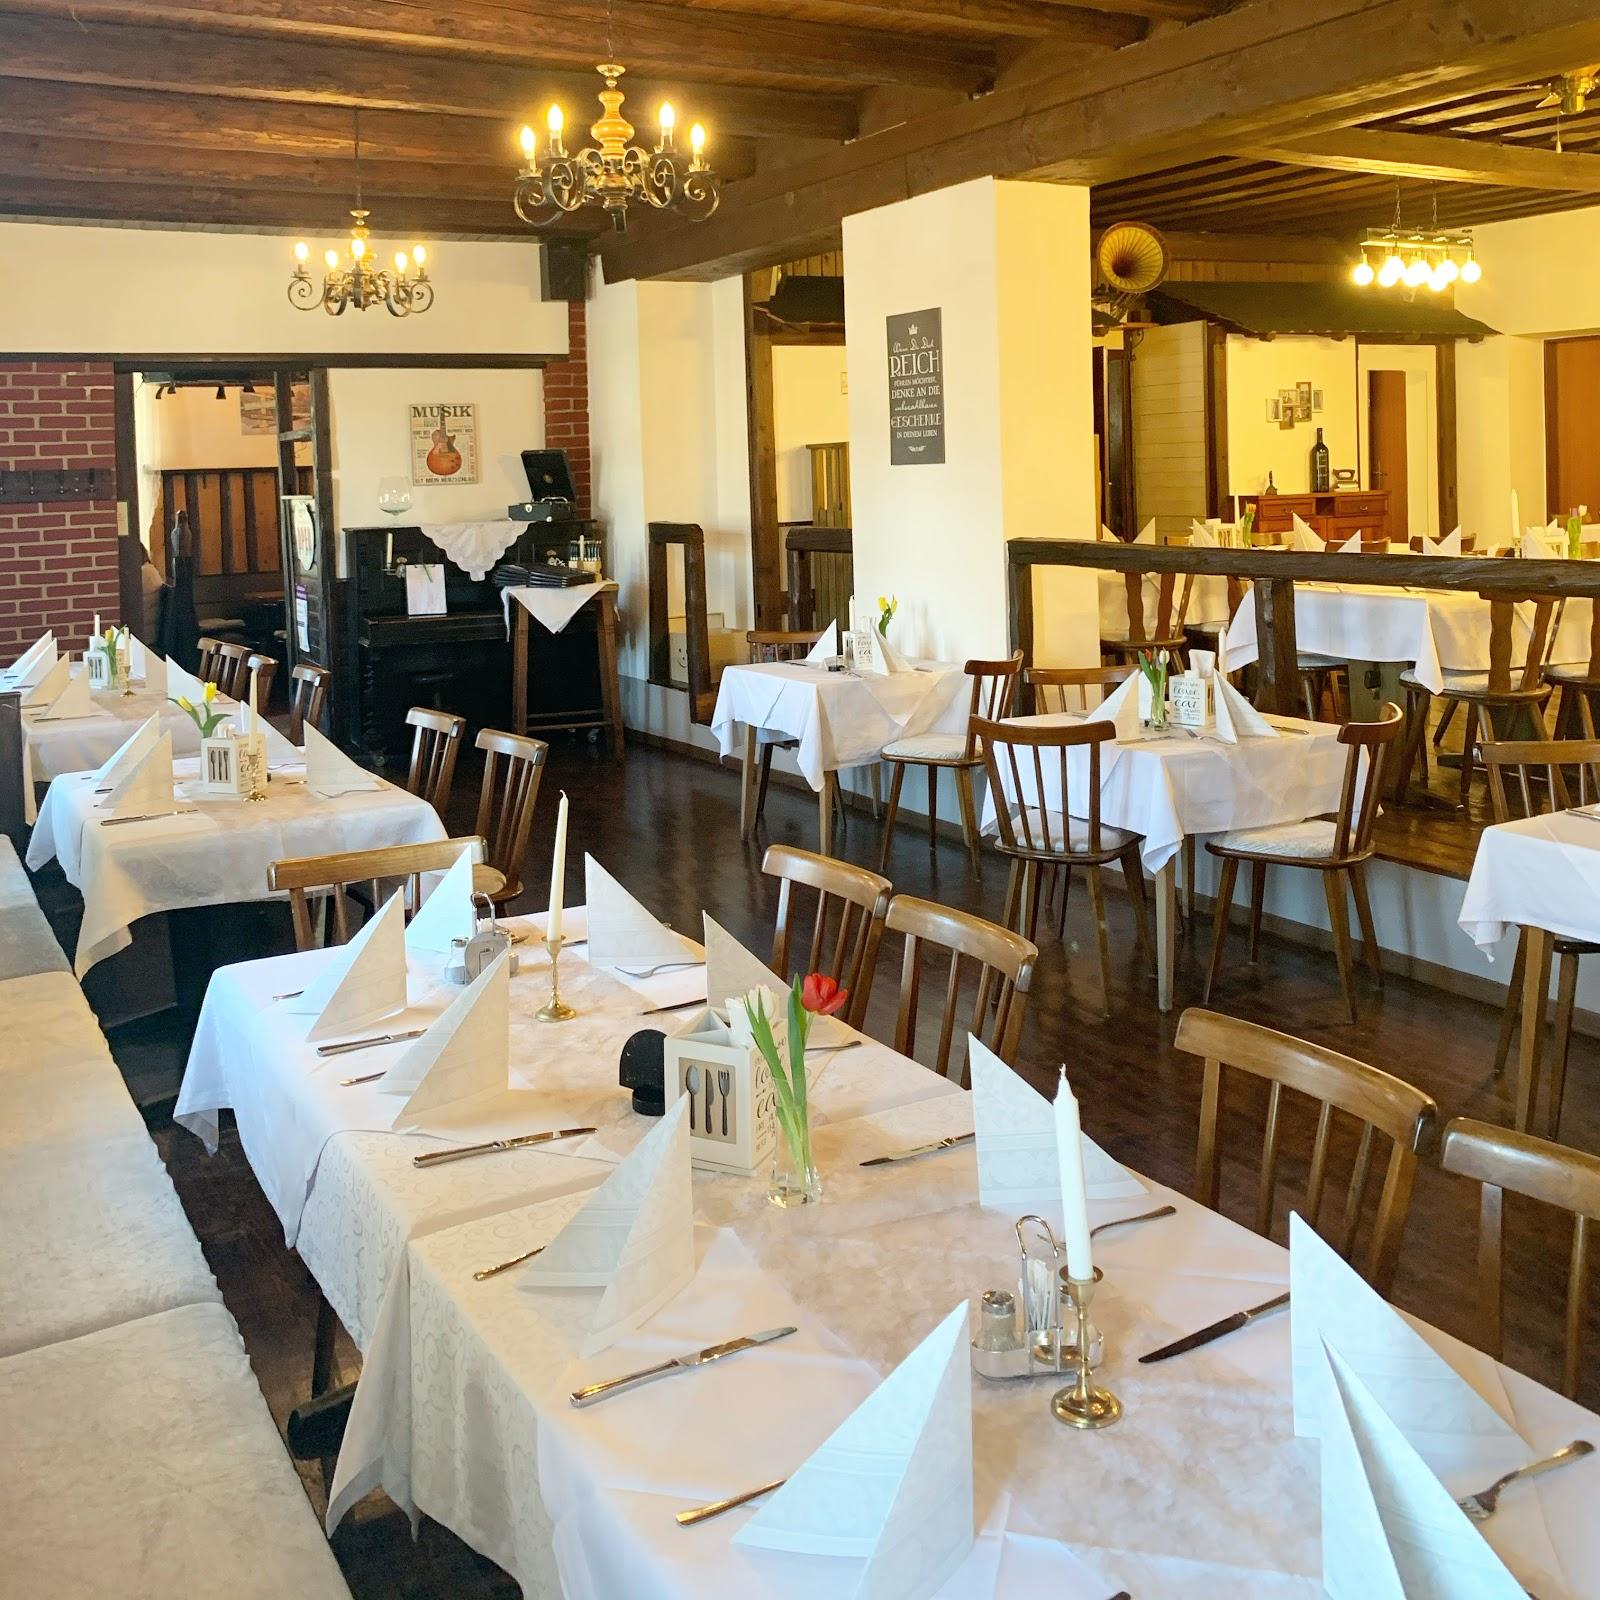 Restaurant "Taverna KaHof" in Lanzenkirchen